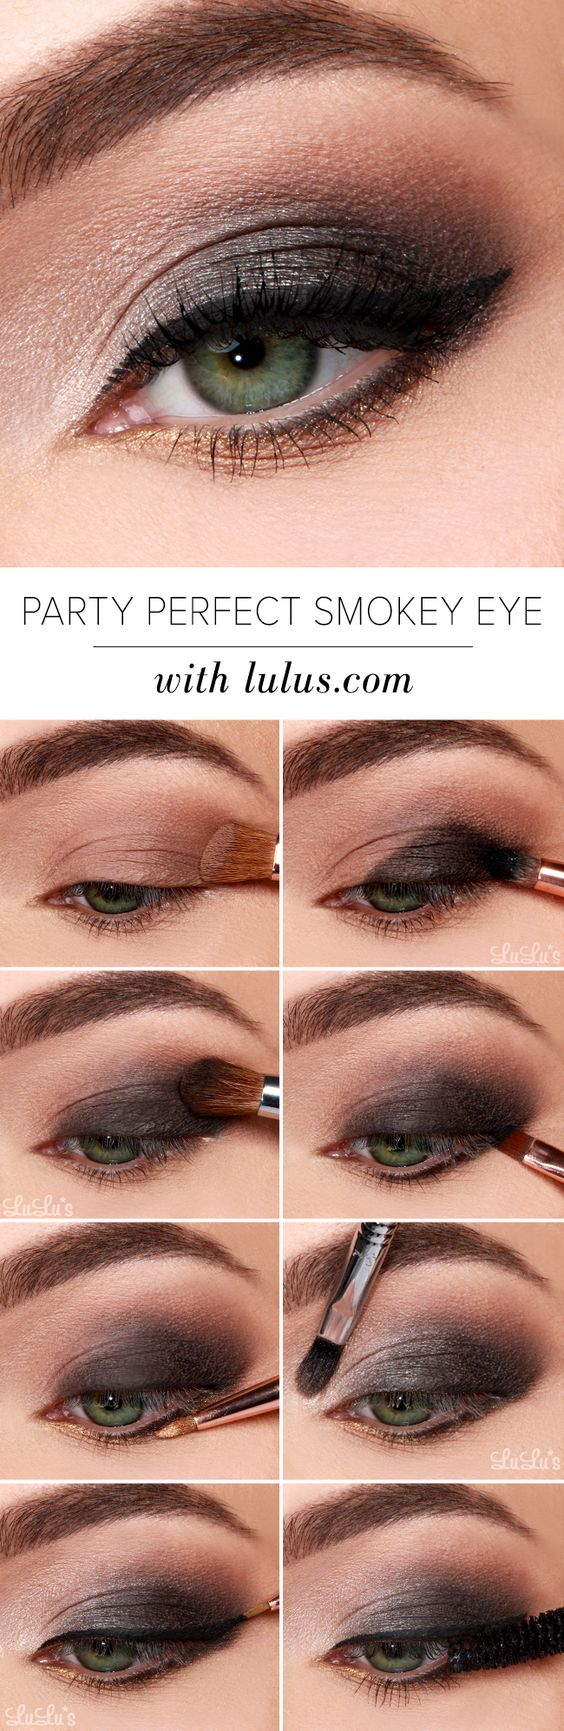 Simple Smokey Eye Makeup 40 Hottest Smokey Eye Makeup Ideas 2019 Smokey Eye Tutorials For